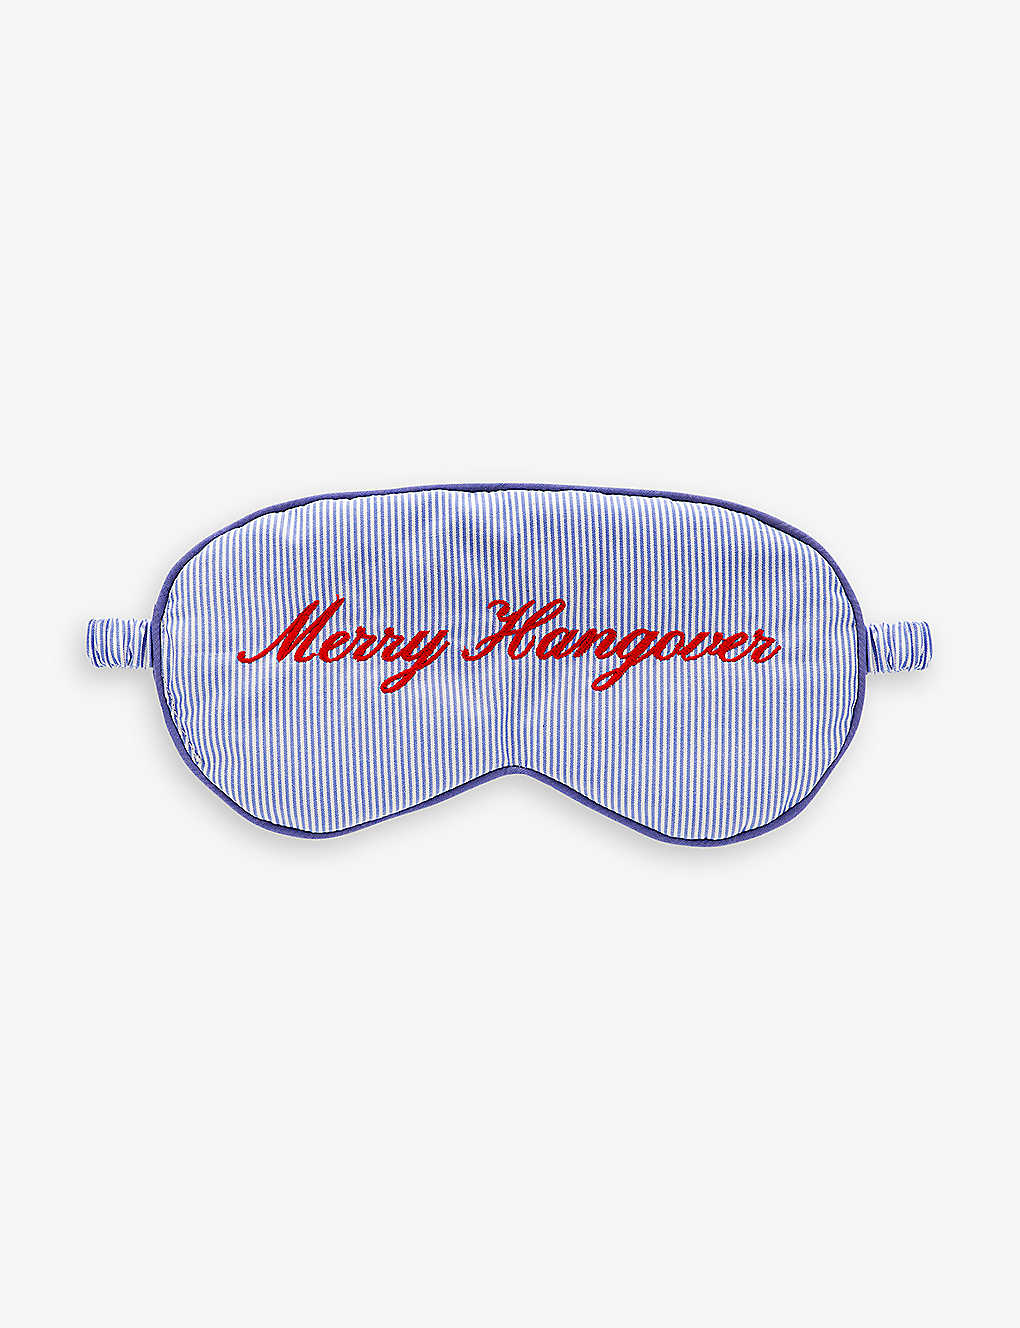 Anna + Nina Merry Hangover Slogan-embroidered Cotton Sleeping Mask